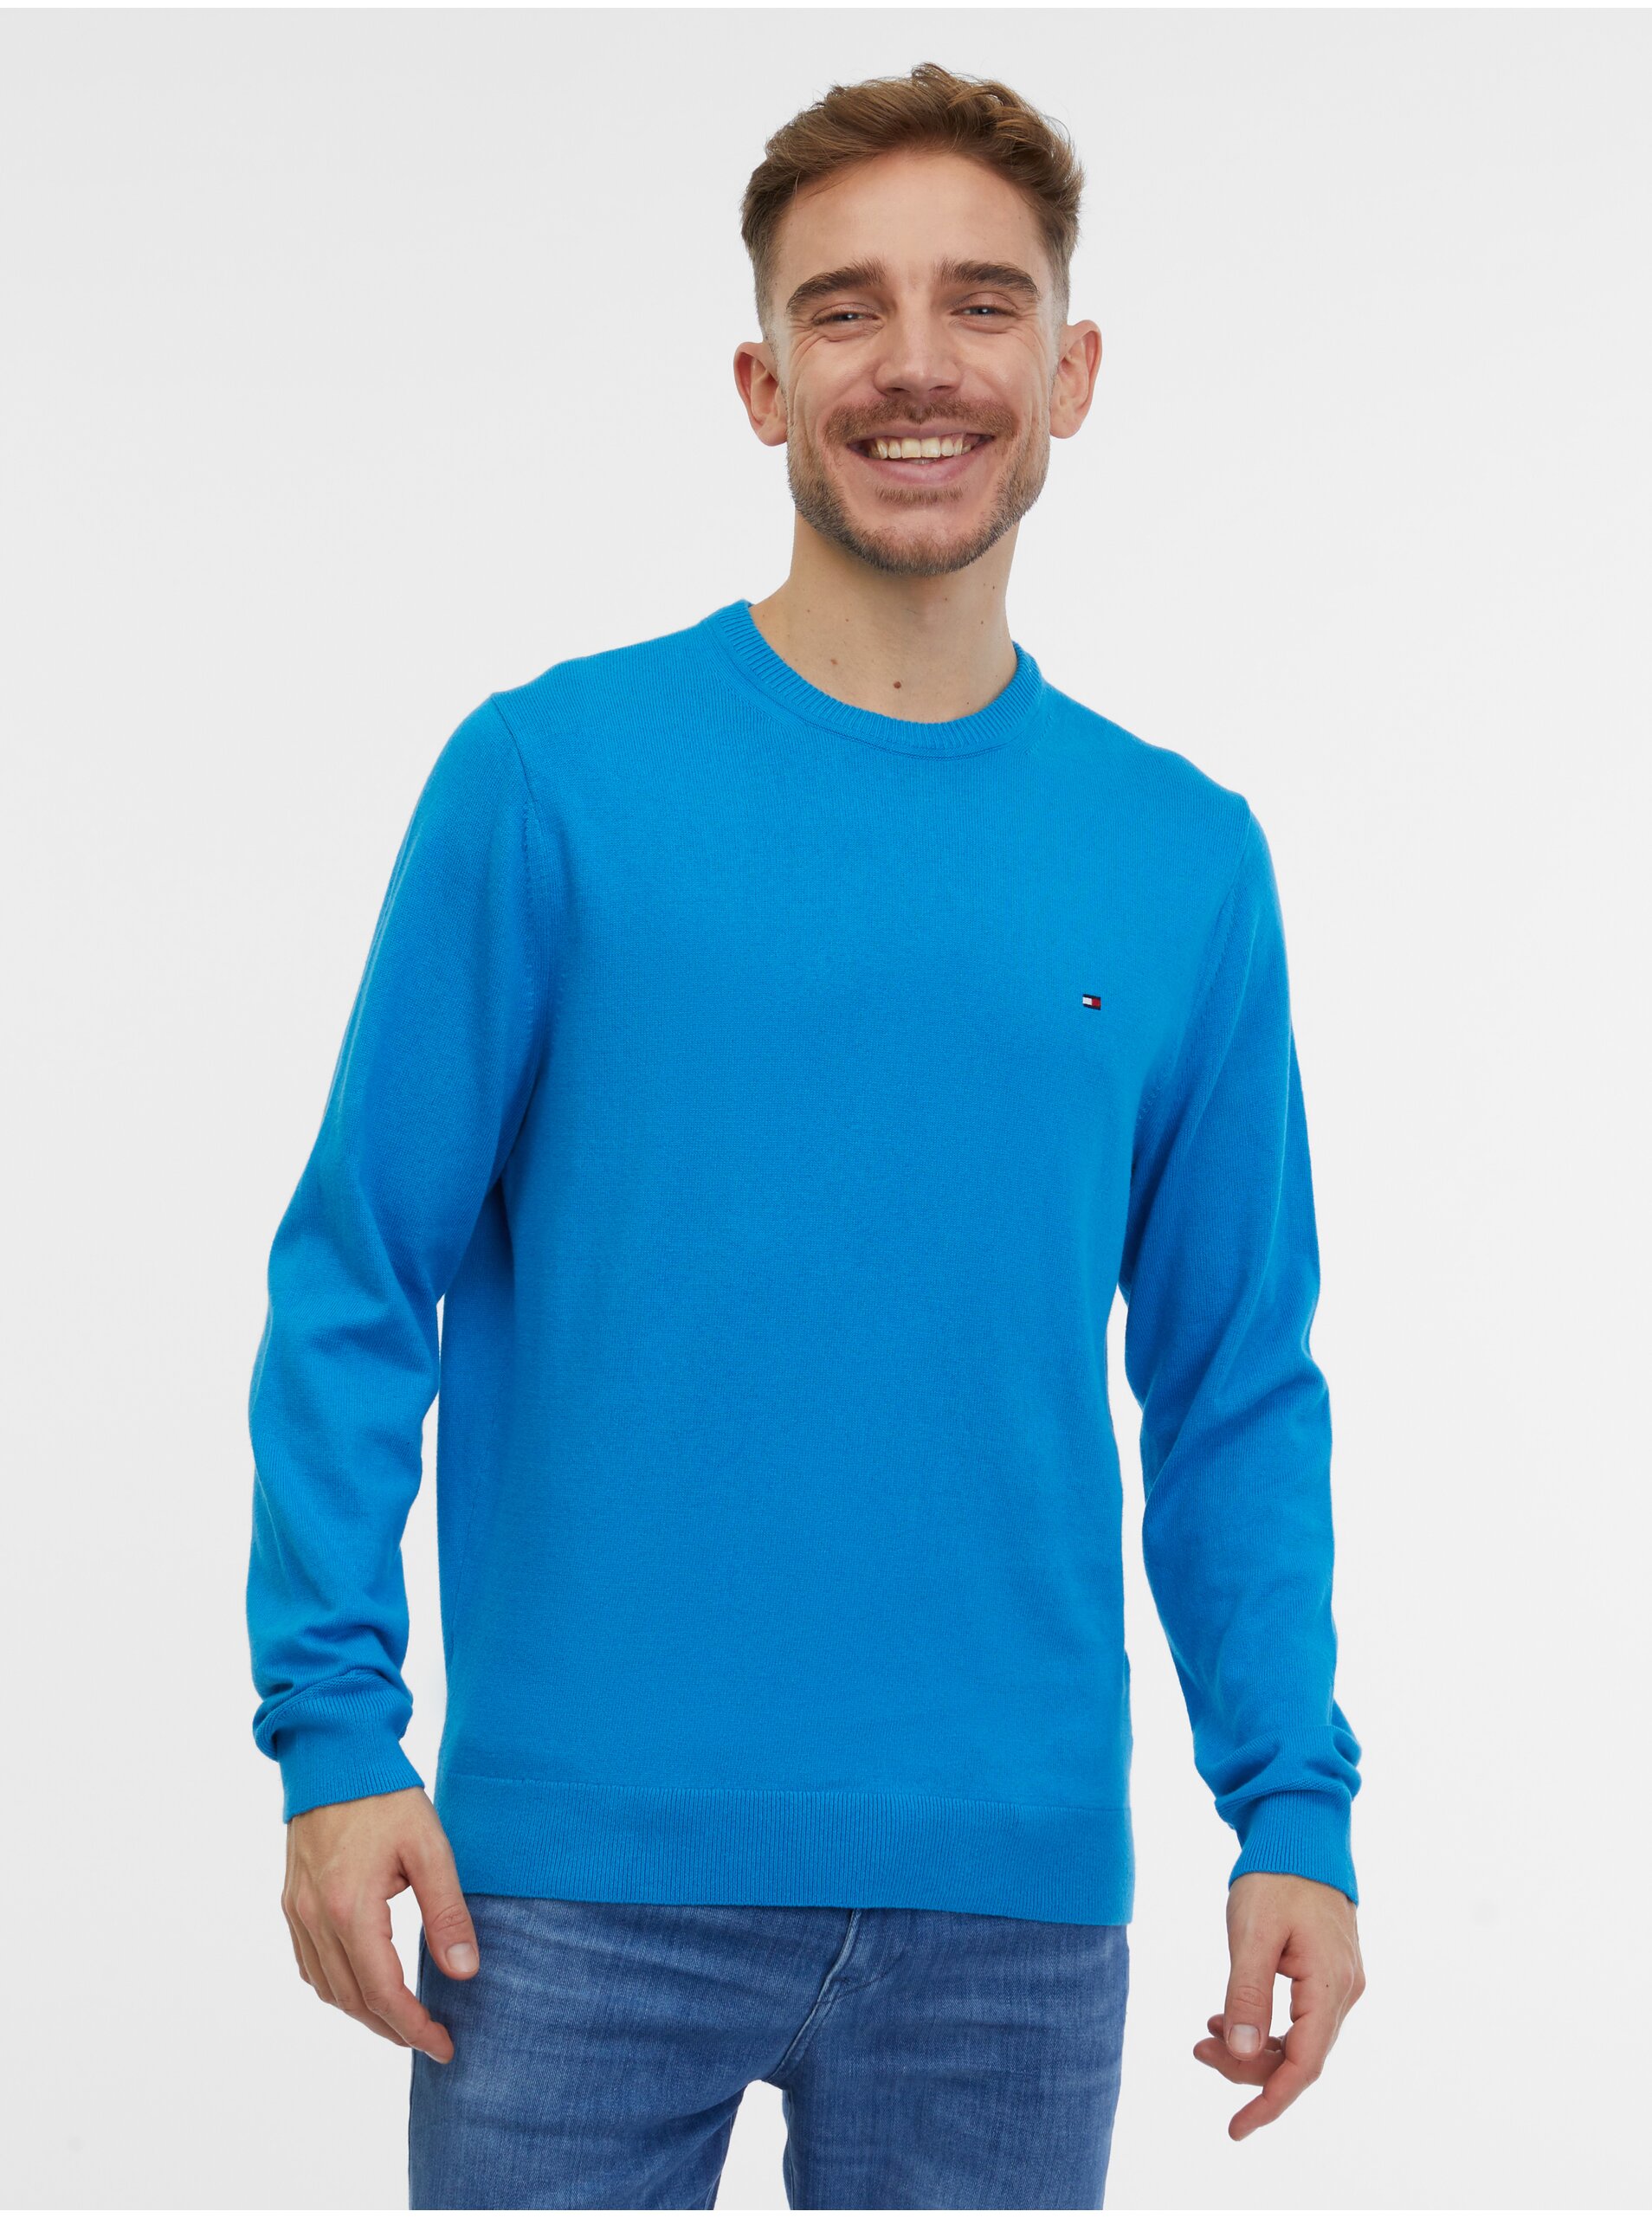 Lacno Modrý pánsky sveter s prímesou kašmíru Tommy Hilfiger